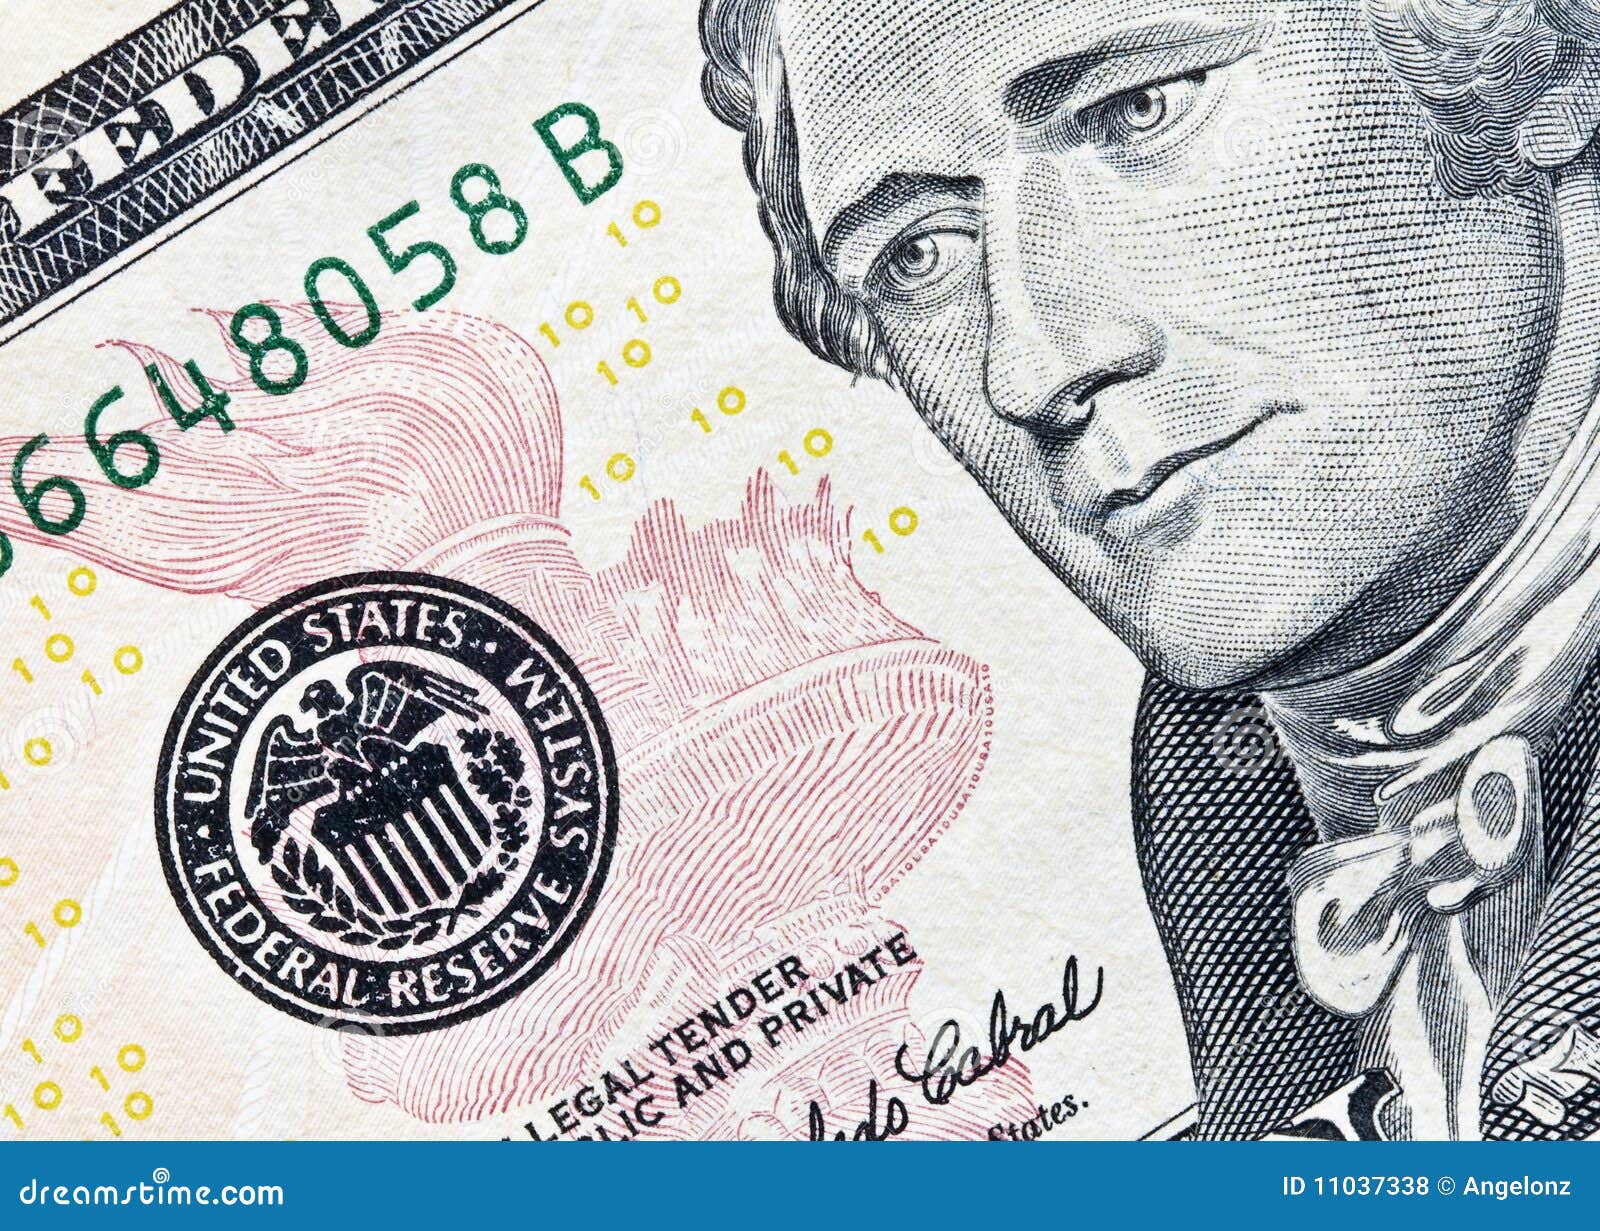 ten dollar bill focus on federal reserve seal